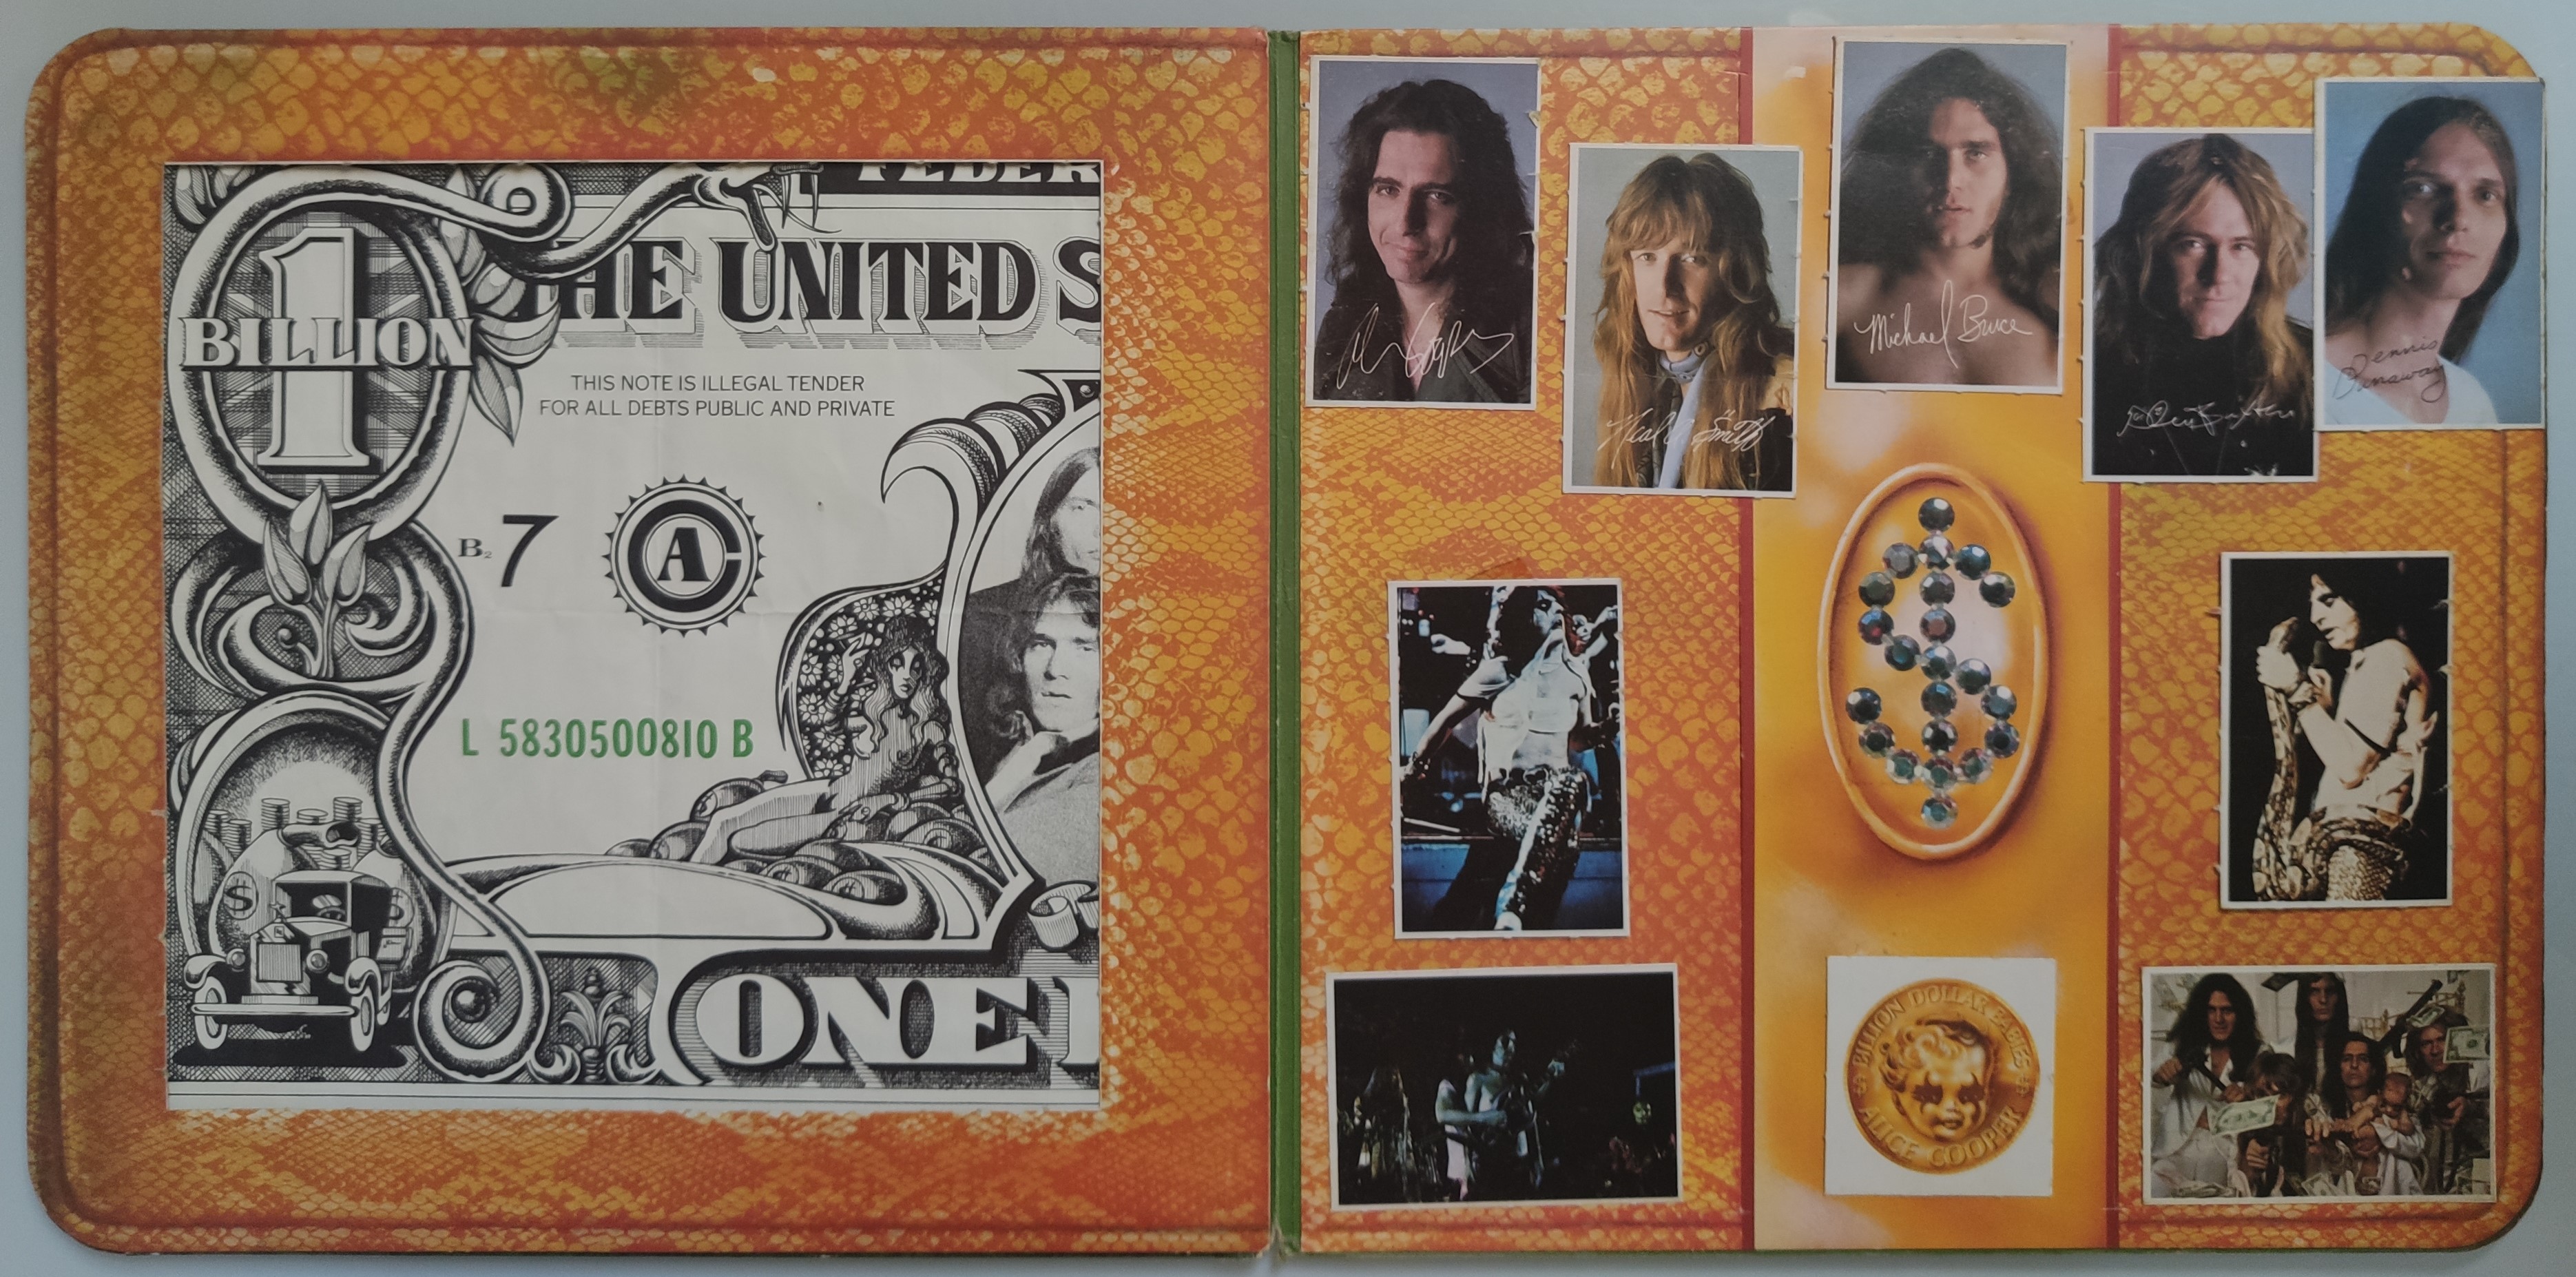 Alice Cooper – Billion Dollars Babies Vinyl LP – UK 1973 First Pressing. Matrix No A1 / B1 - Image 3 of 4